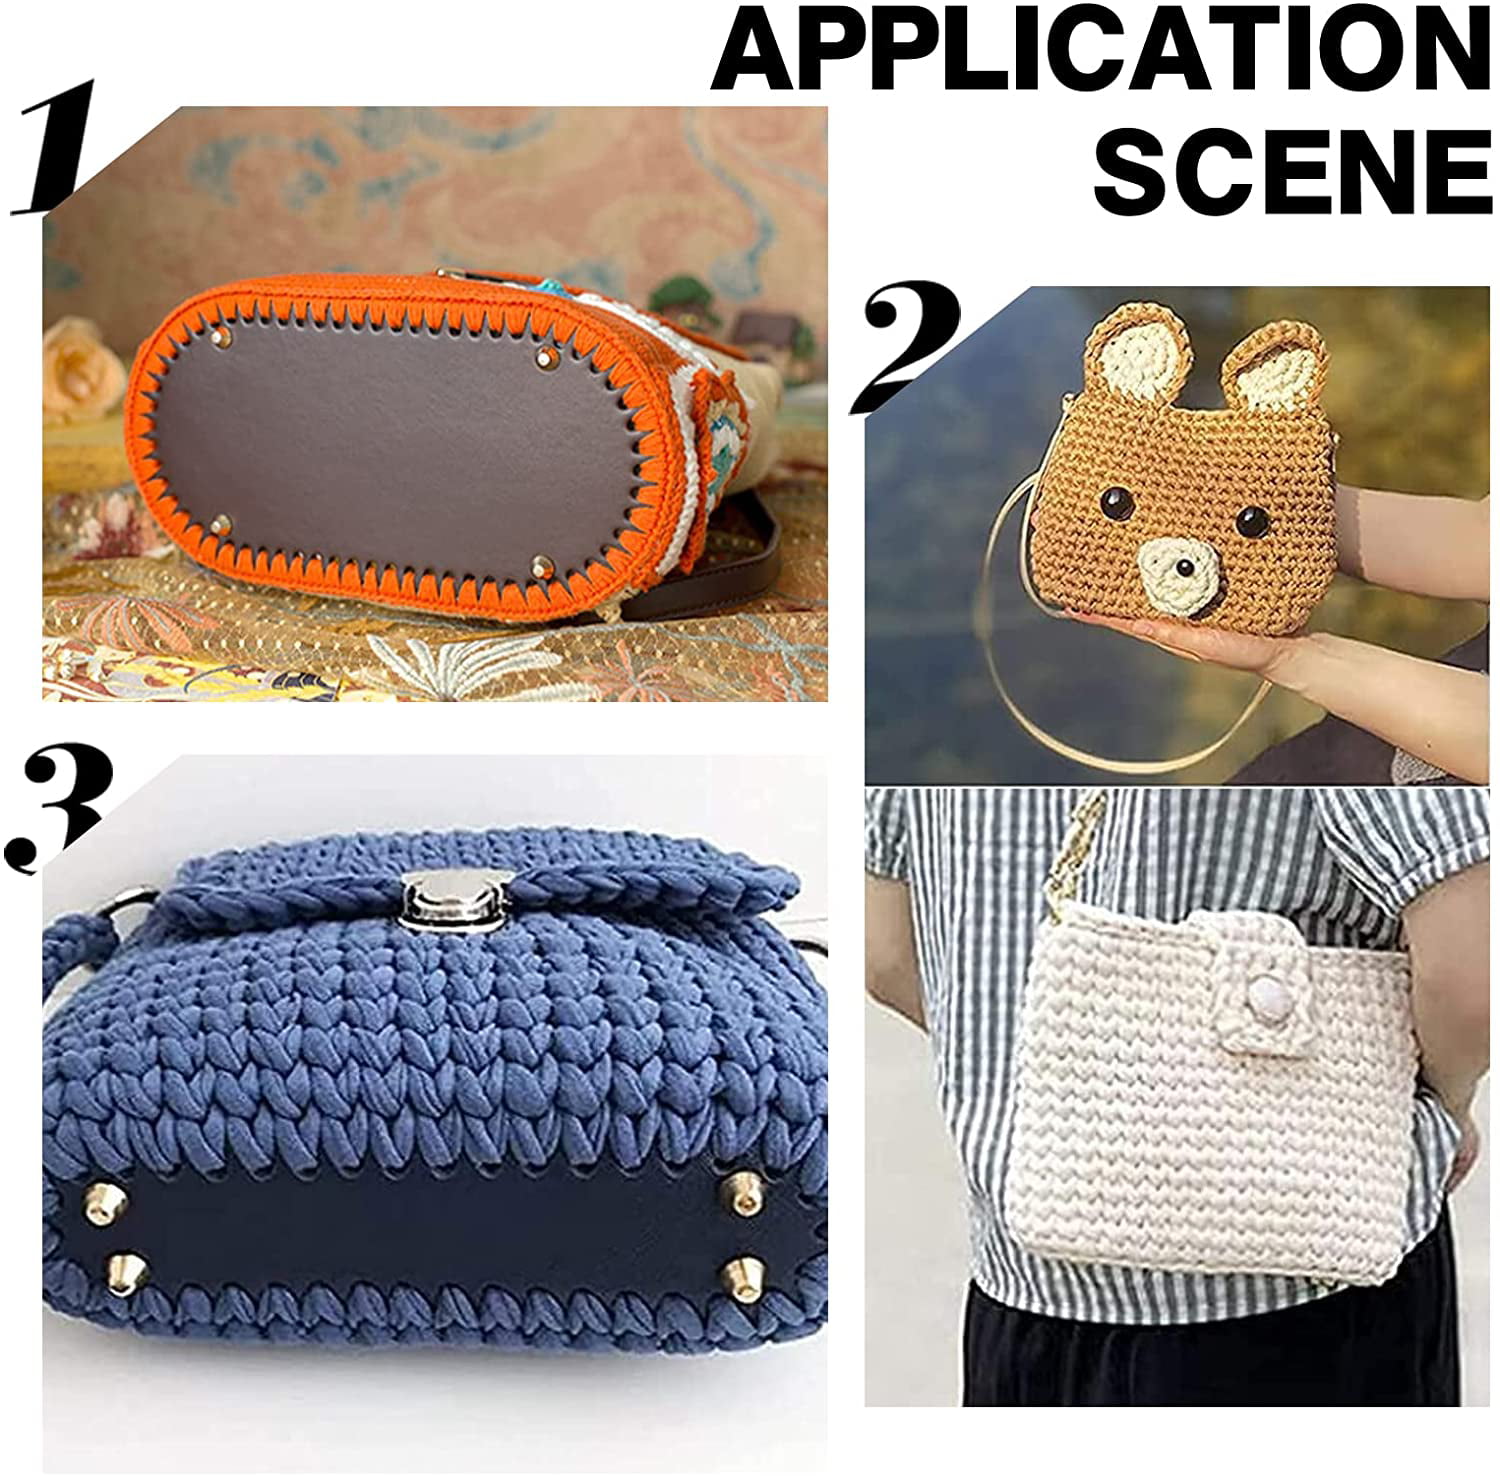  CHGCRAFT 2pcs Grey PU Leather Oval Flat Bag Bottom Women Bags  Base Handmade DIY Accessories for Knitting Crochet Bag Making  9.9x4.8x0.37inch : Everything Else